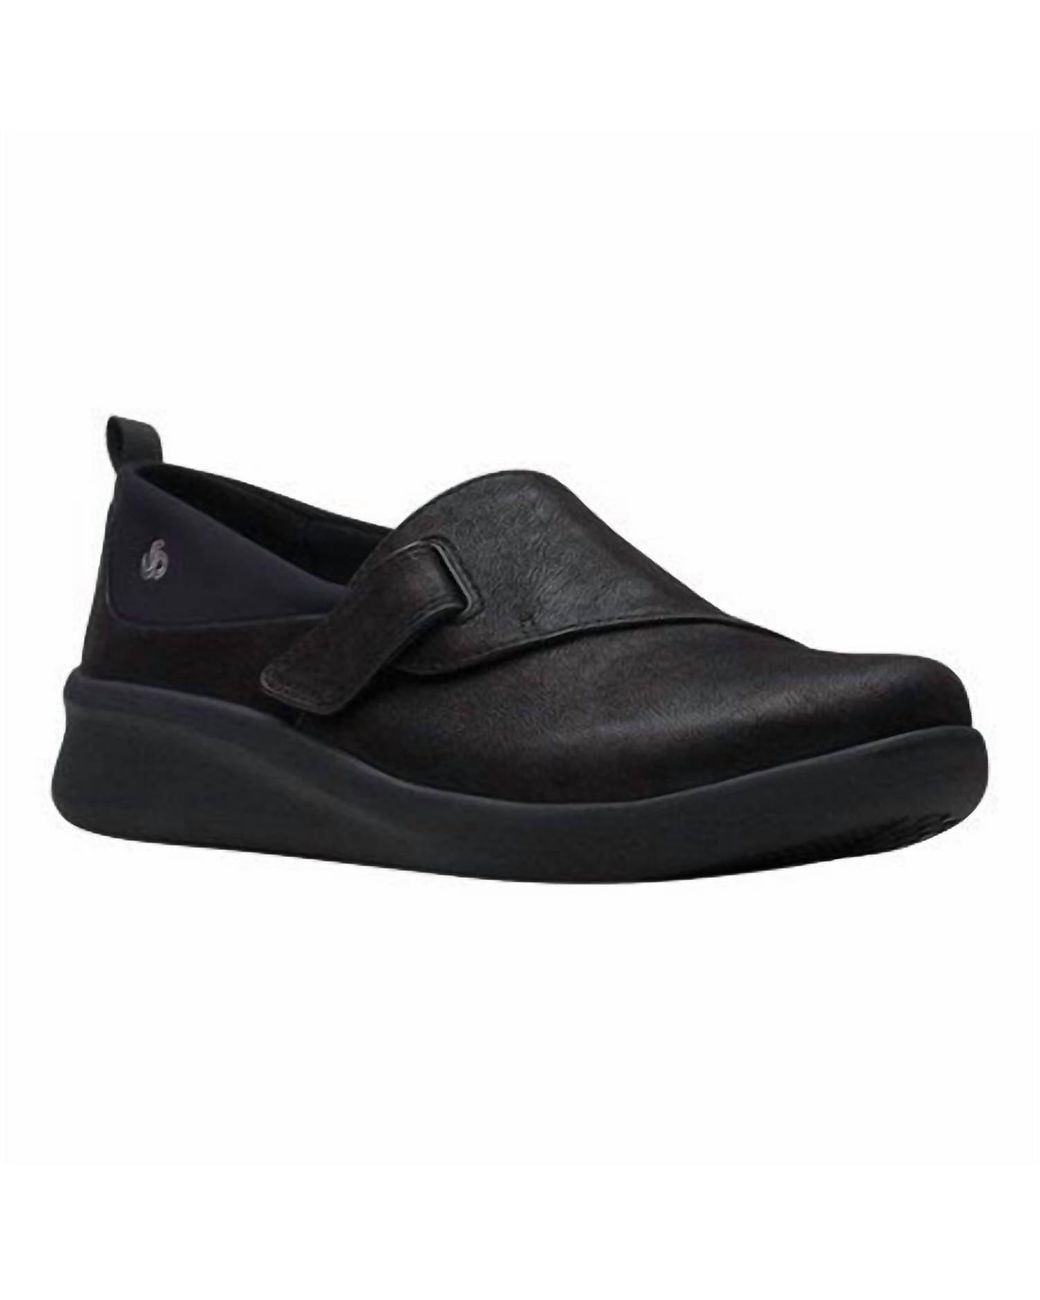 Clarks Sillian 2.0 Ease Loafer in Black | Lyst